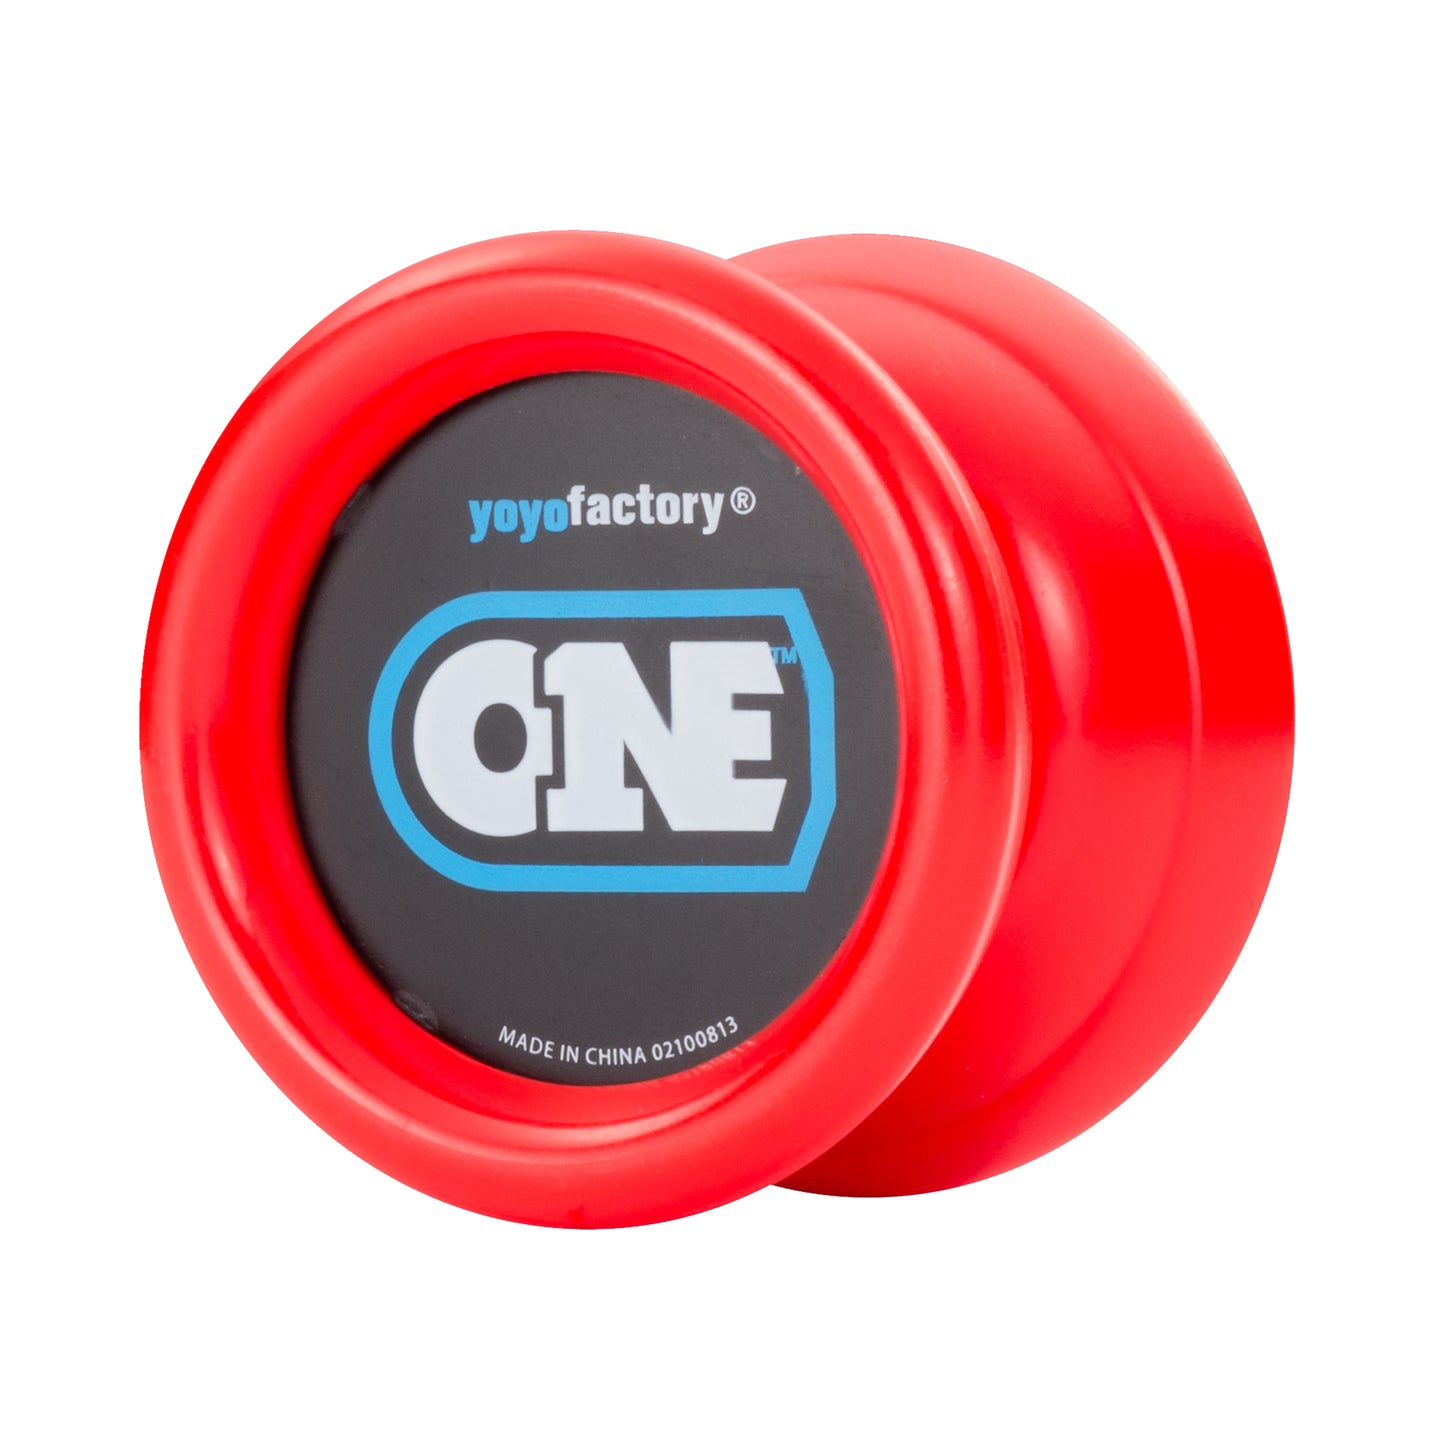 One YoYo red